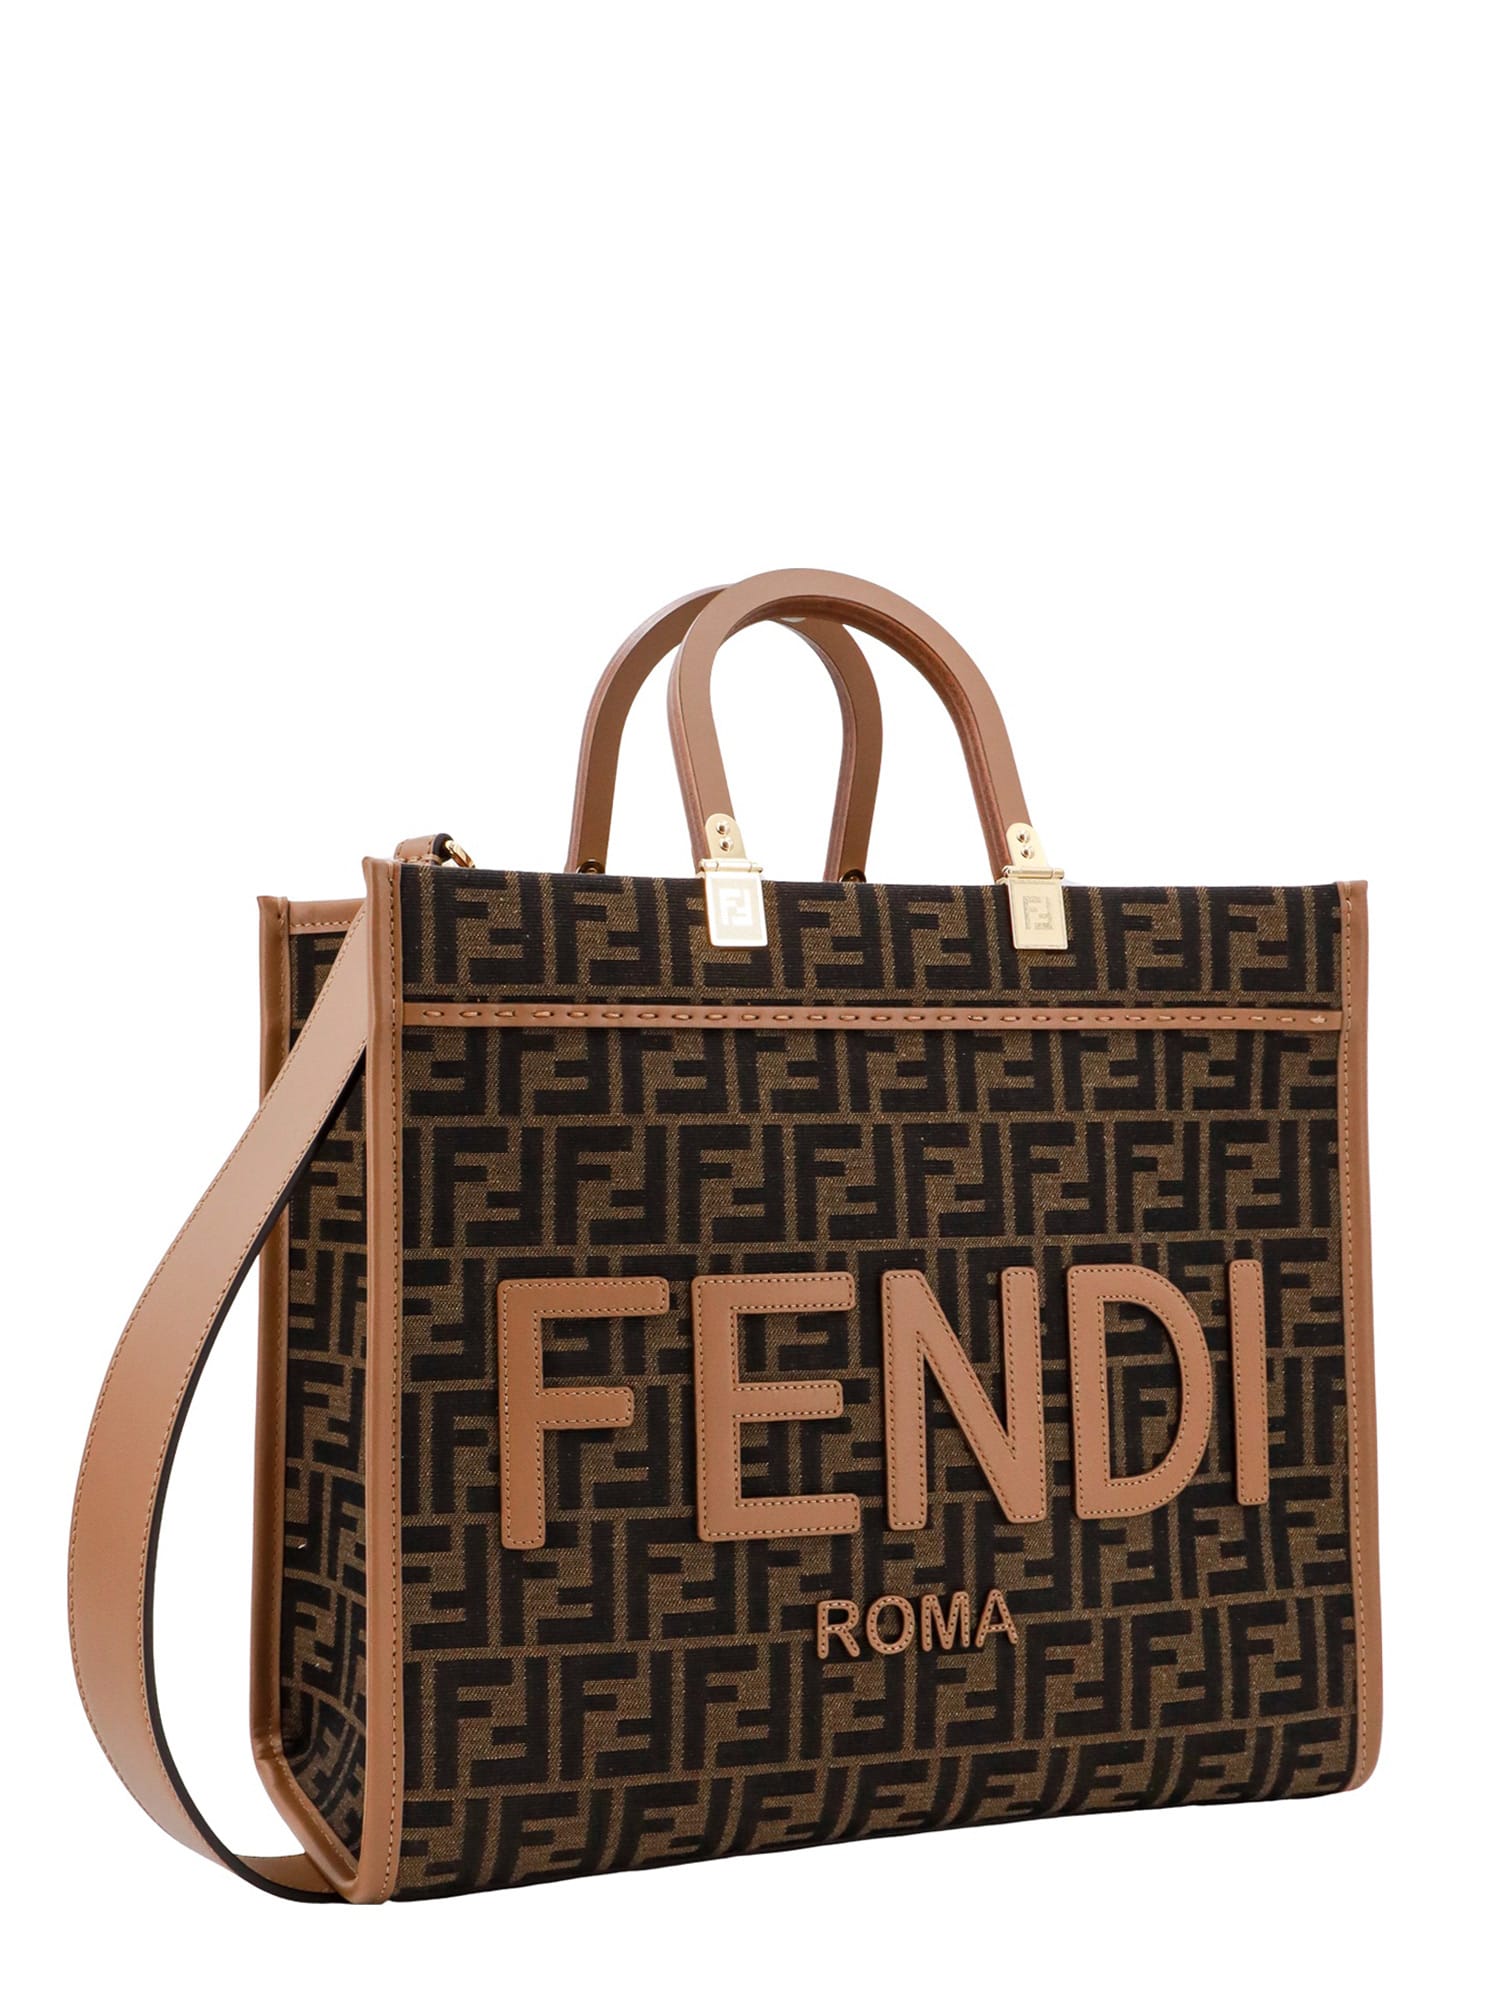 Shop Fendi Sunshine Handbag